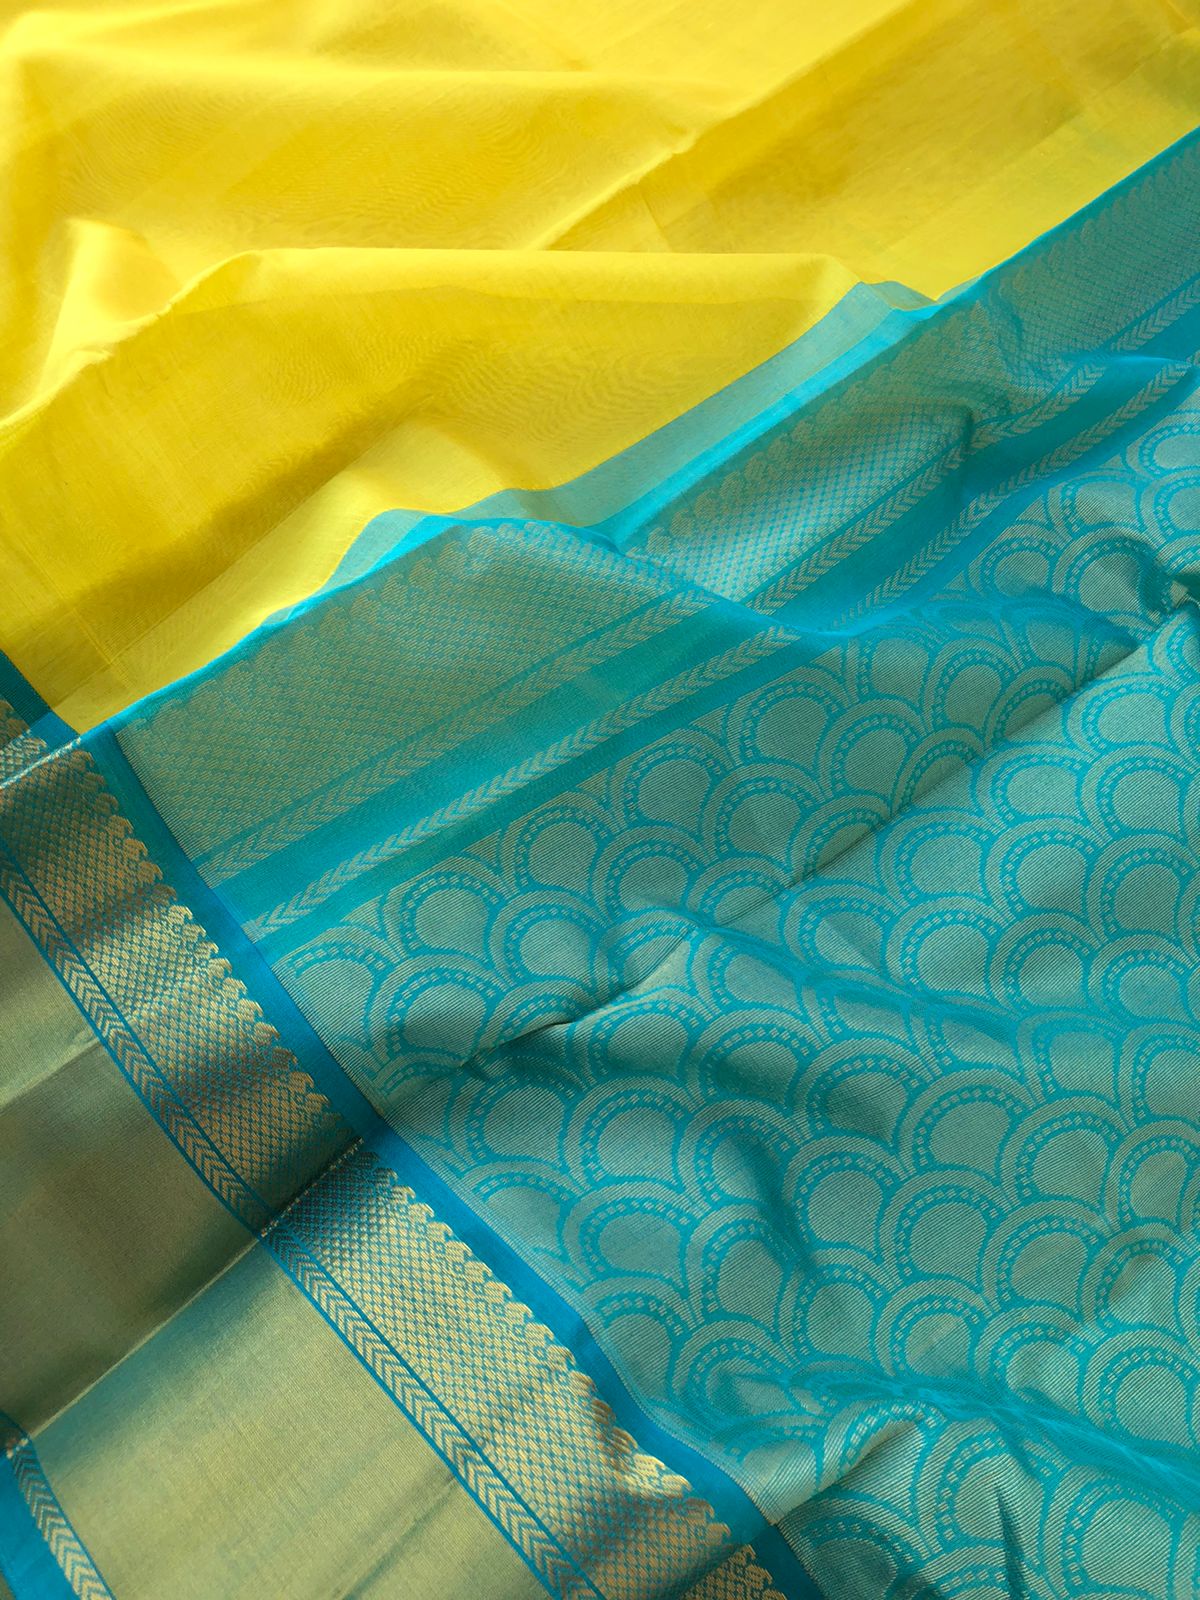 Korvai Silk Cottons Woven Silk Borders - fresh lemon yellow and teal turquoise blue